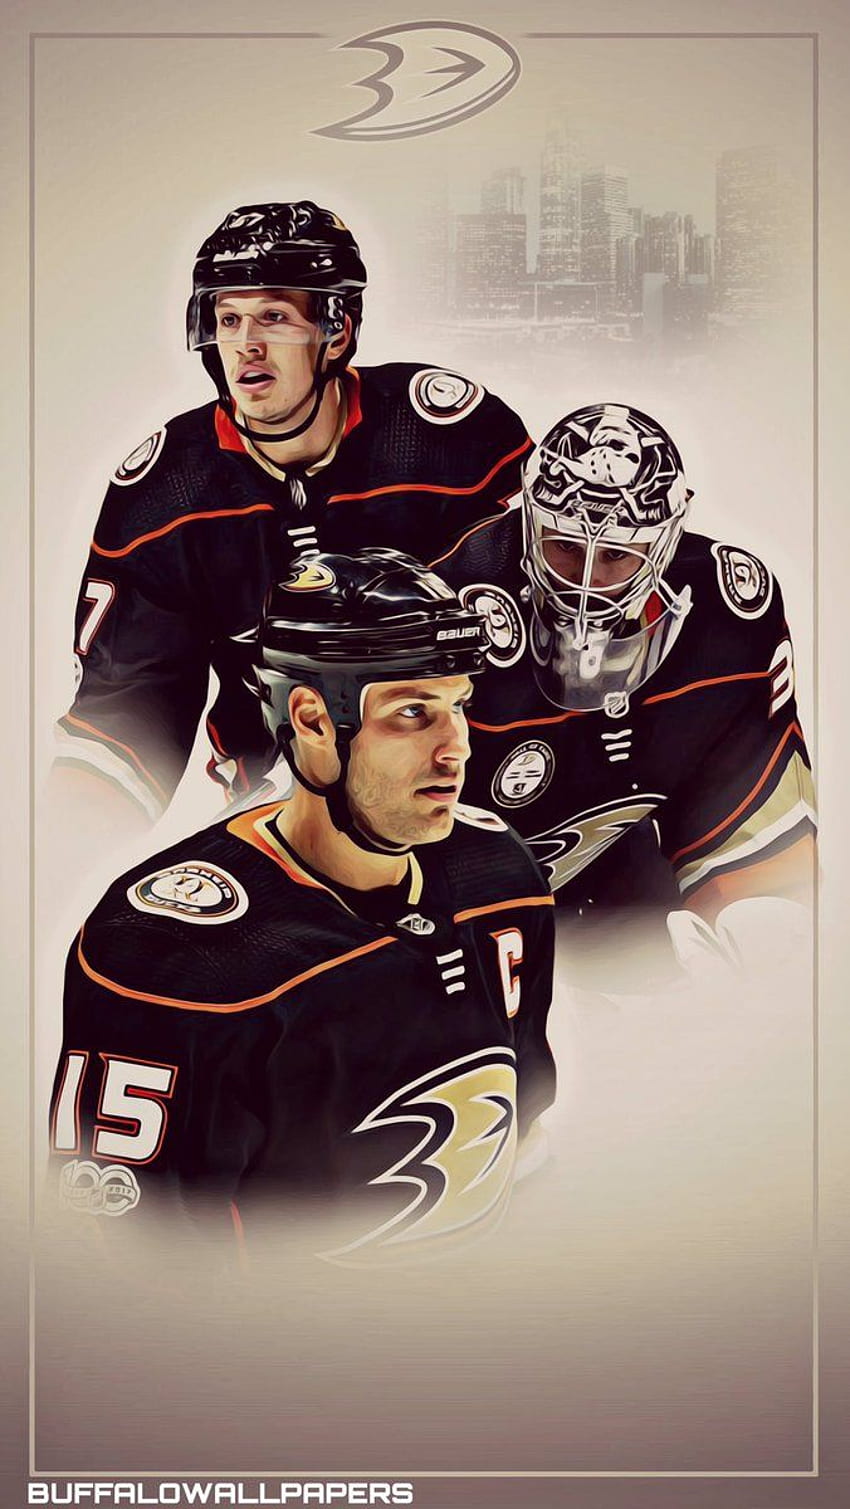 Jordan Santalucia on X: NHL 2018 iPhone wallpapers: Dallas Stars, Detroit  Red Wings, and Edmonton Oilers. #NHL #DallasStars #RedWings #Oilers   / X